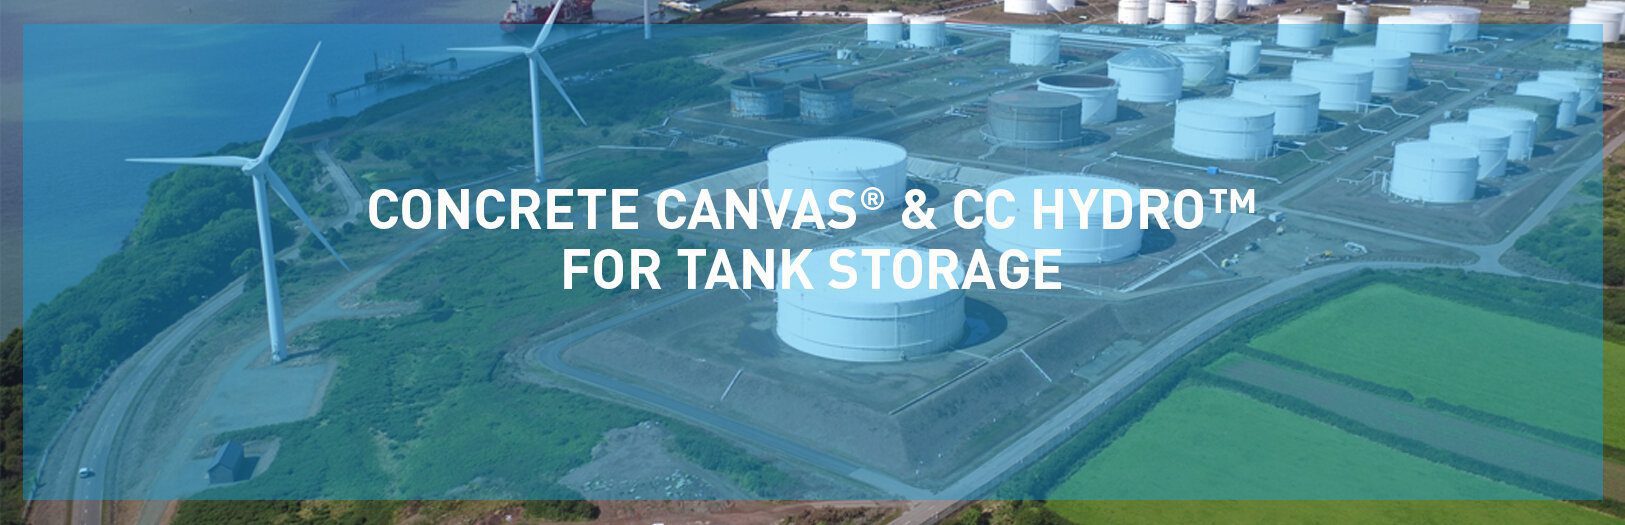 Tank-Storage